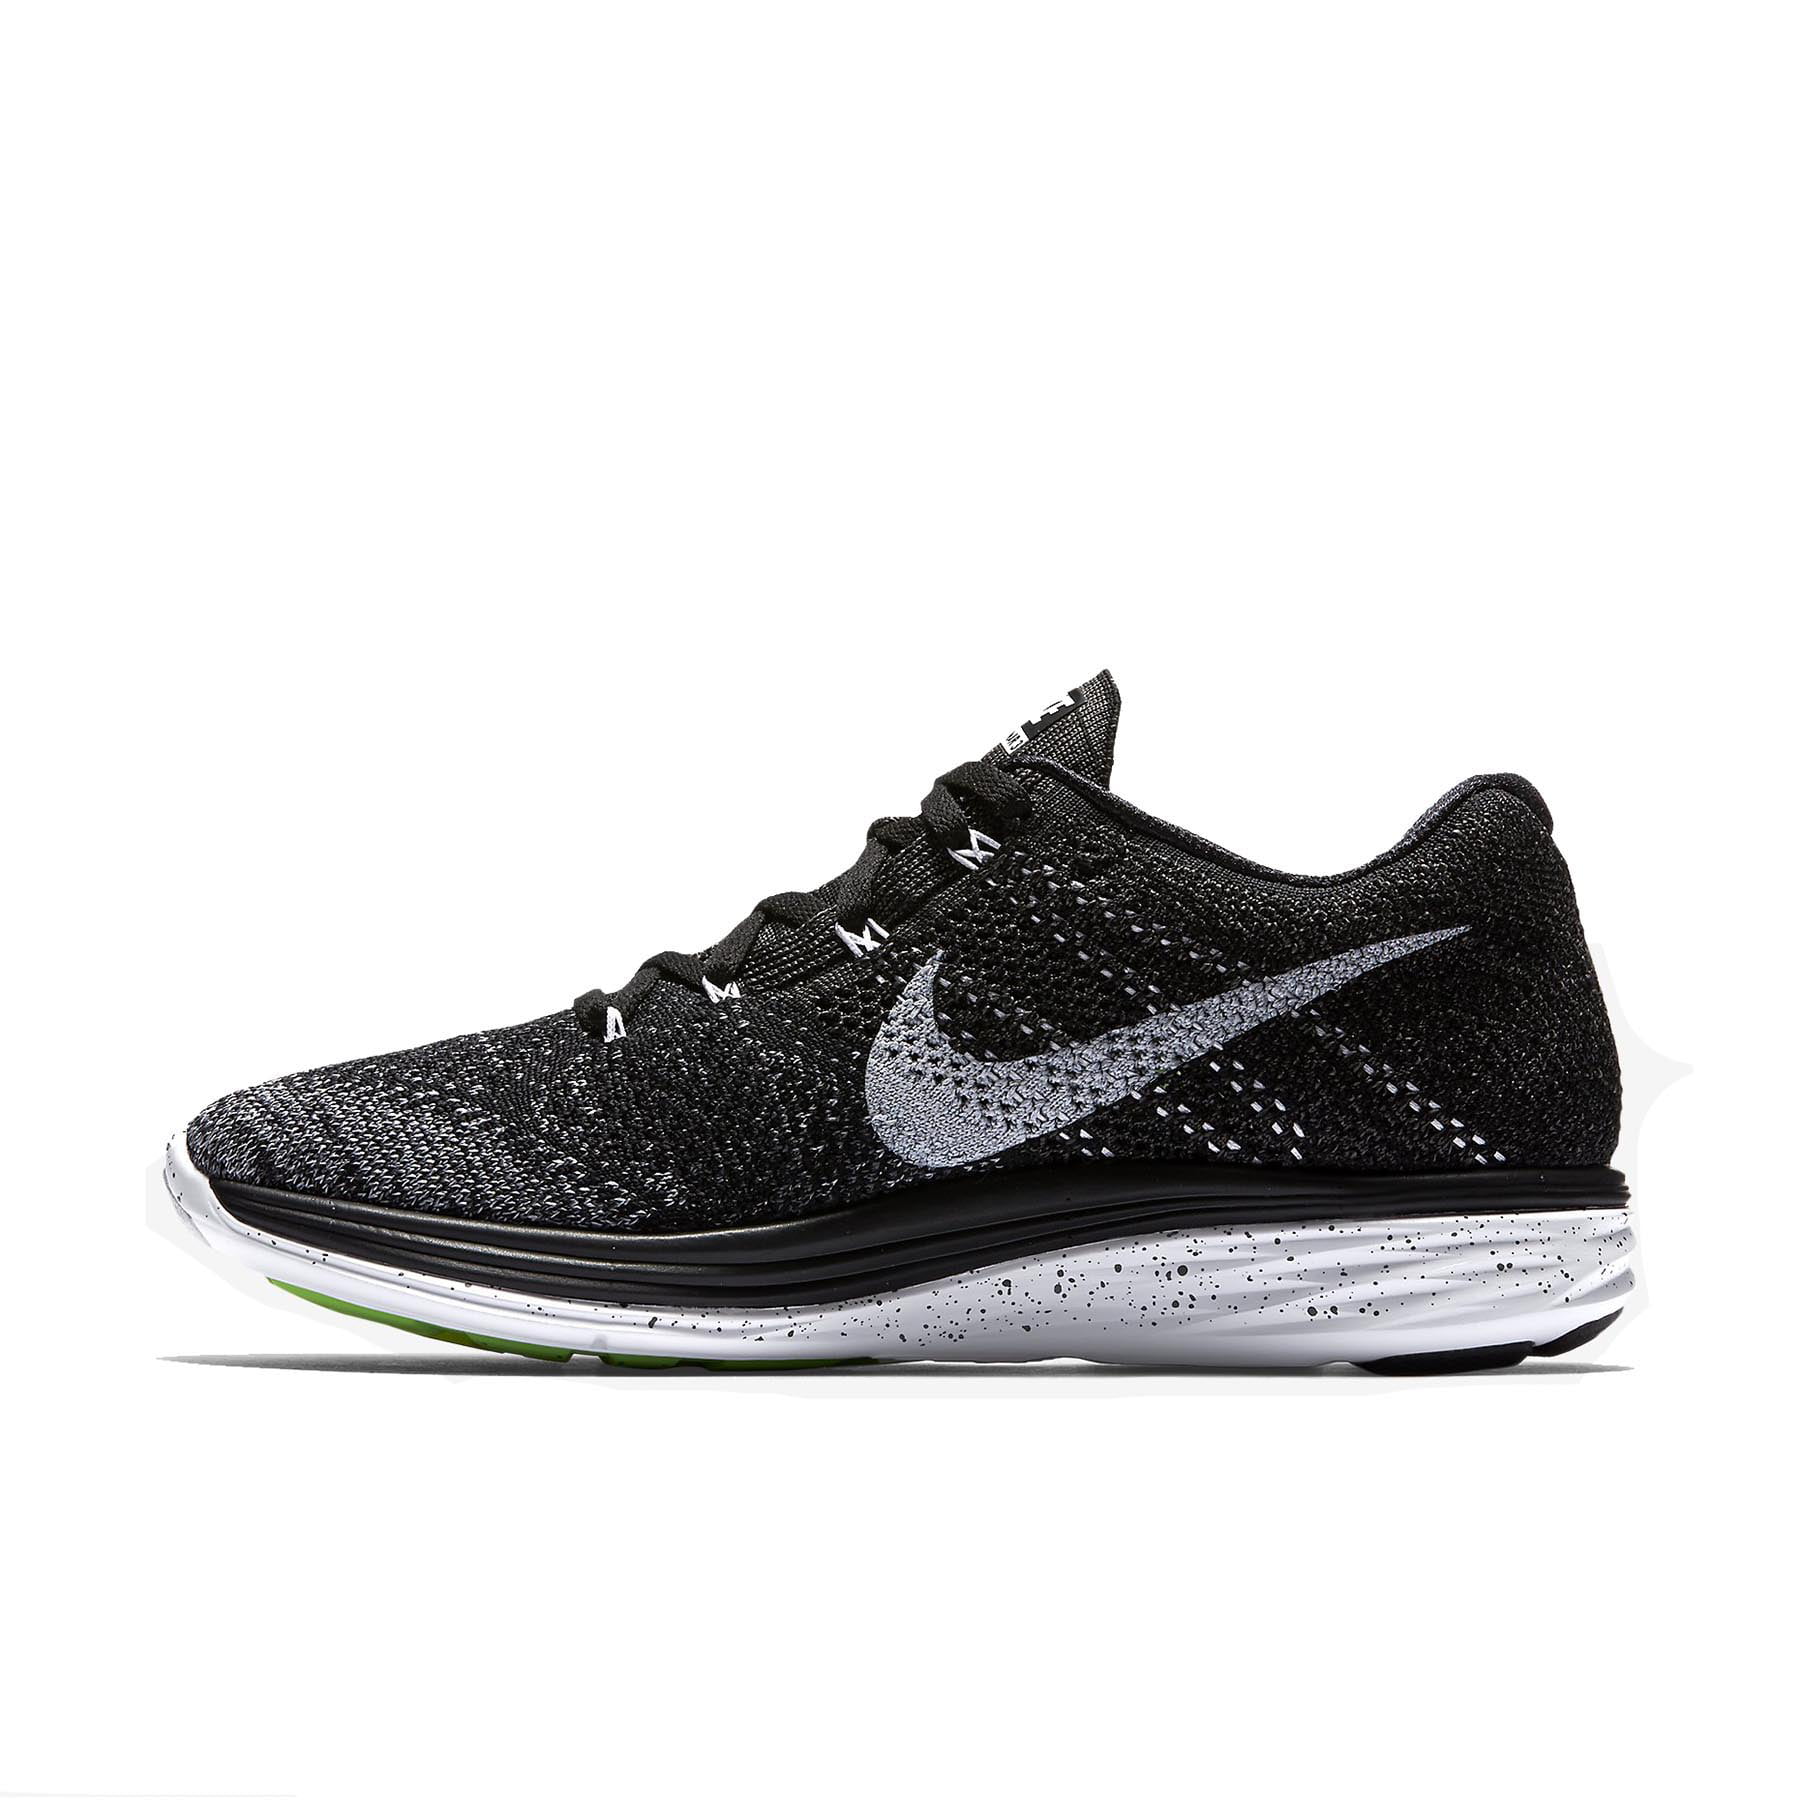 Nike Men's Lunar3 Running Shoe-Black/White - Walmart.com